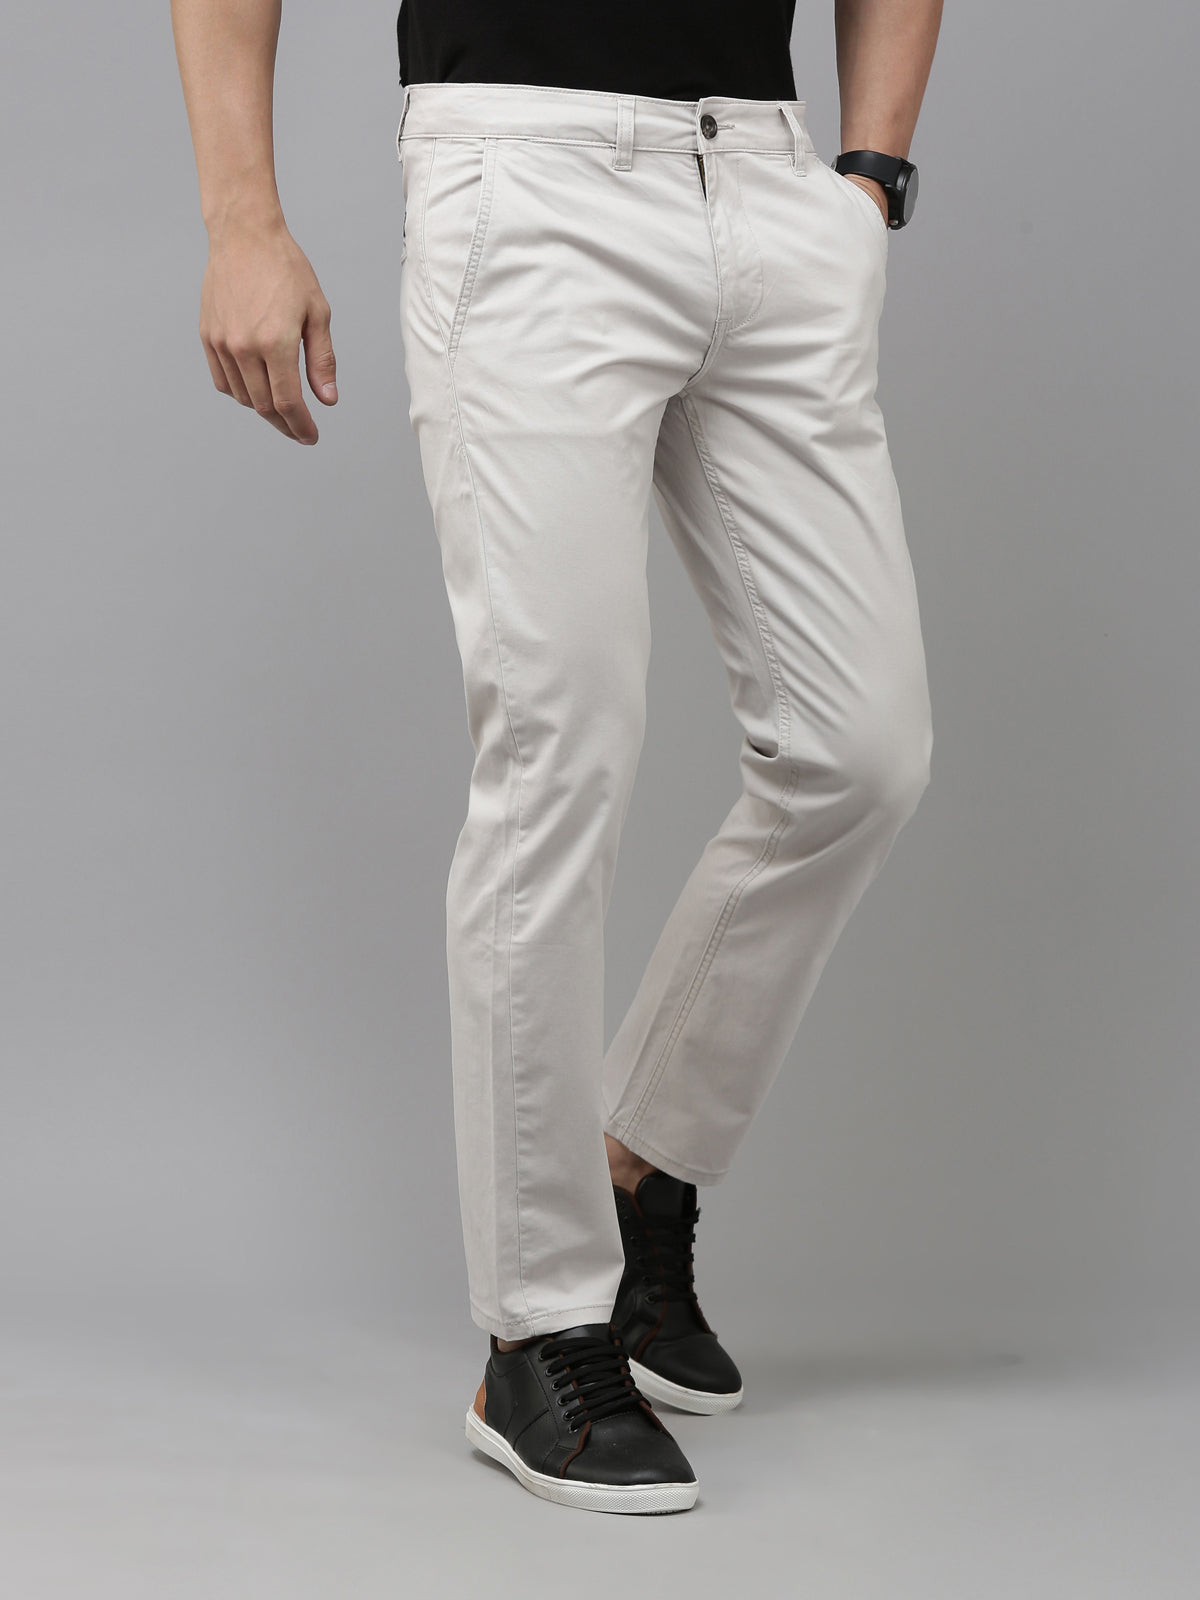 Buy Men's White Slim Fit Jogger Jeans Online at Bewakoof